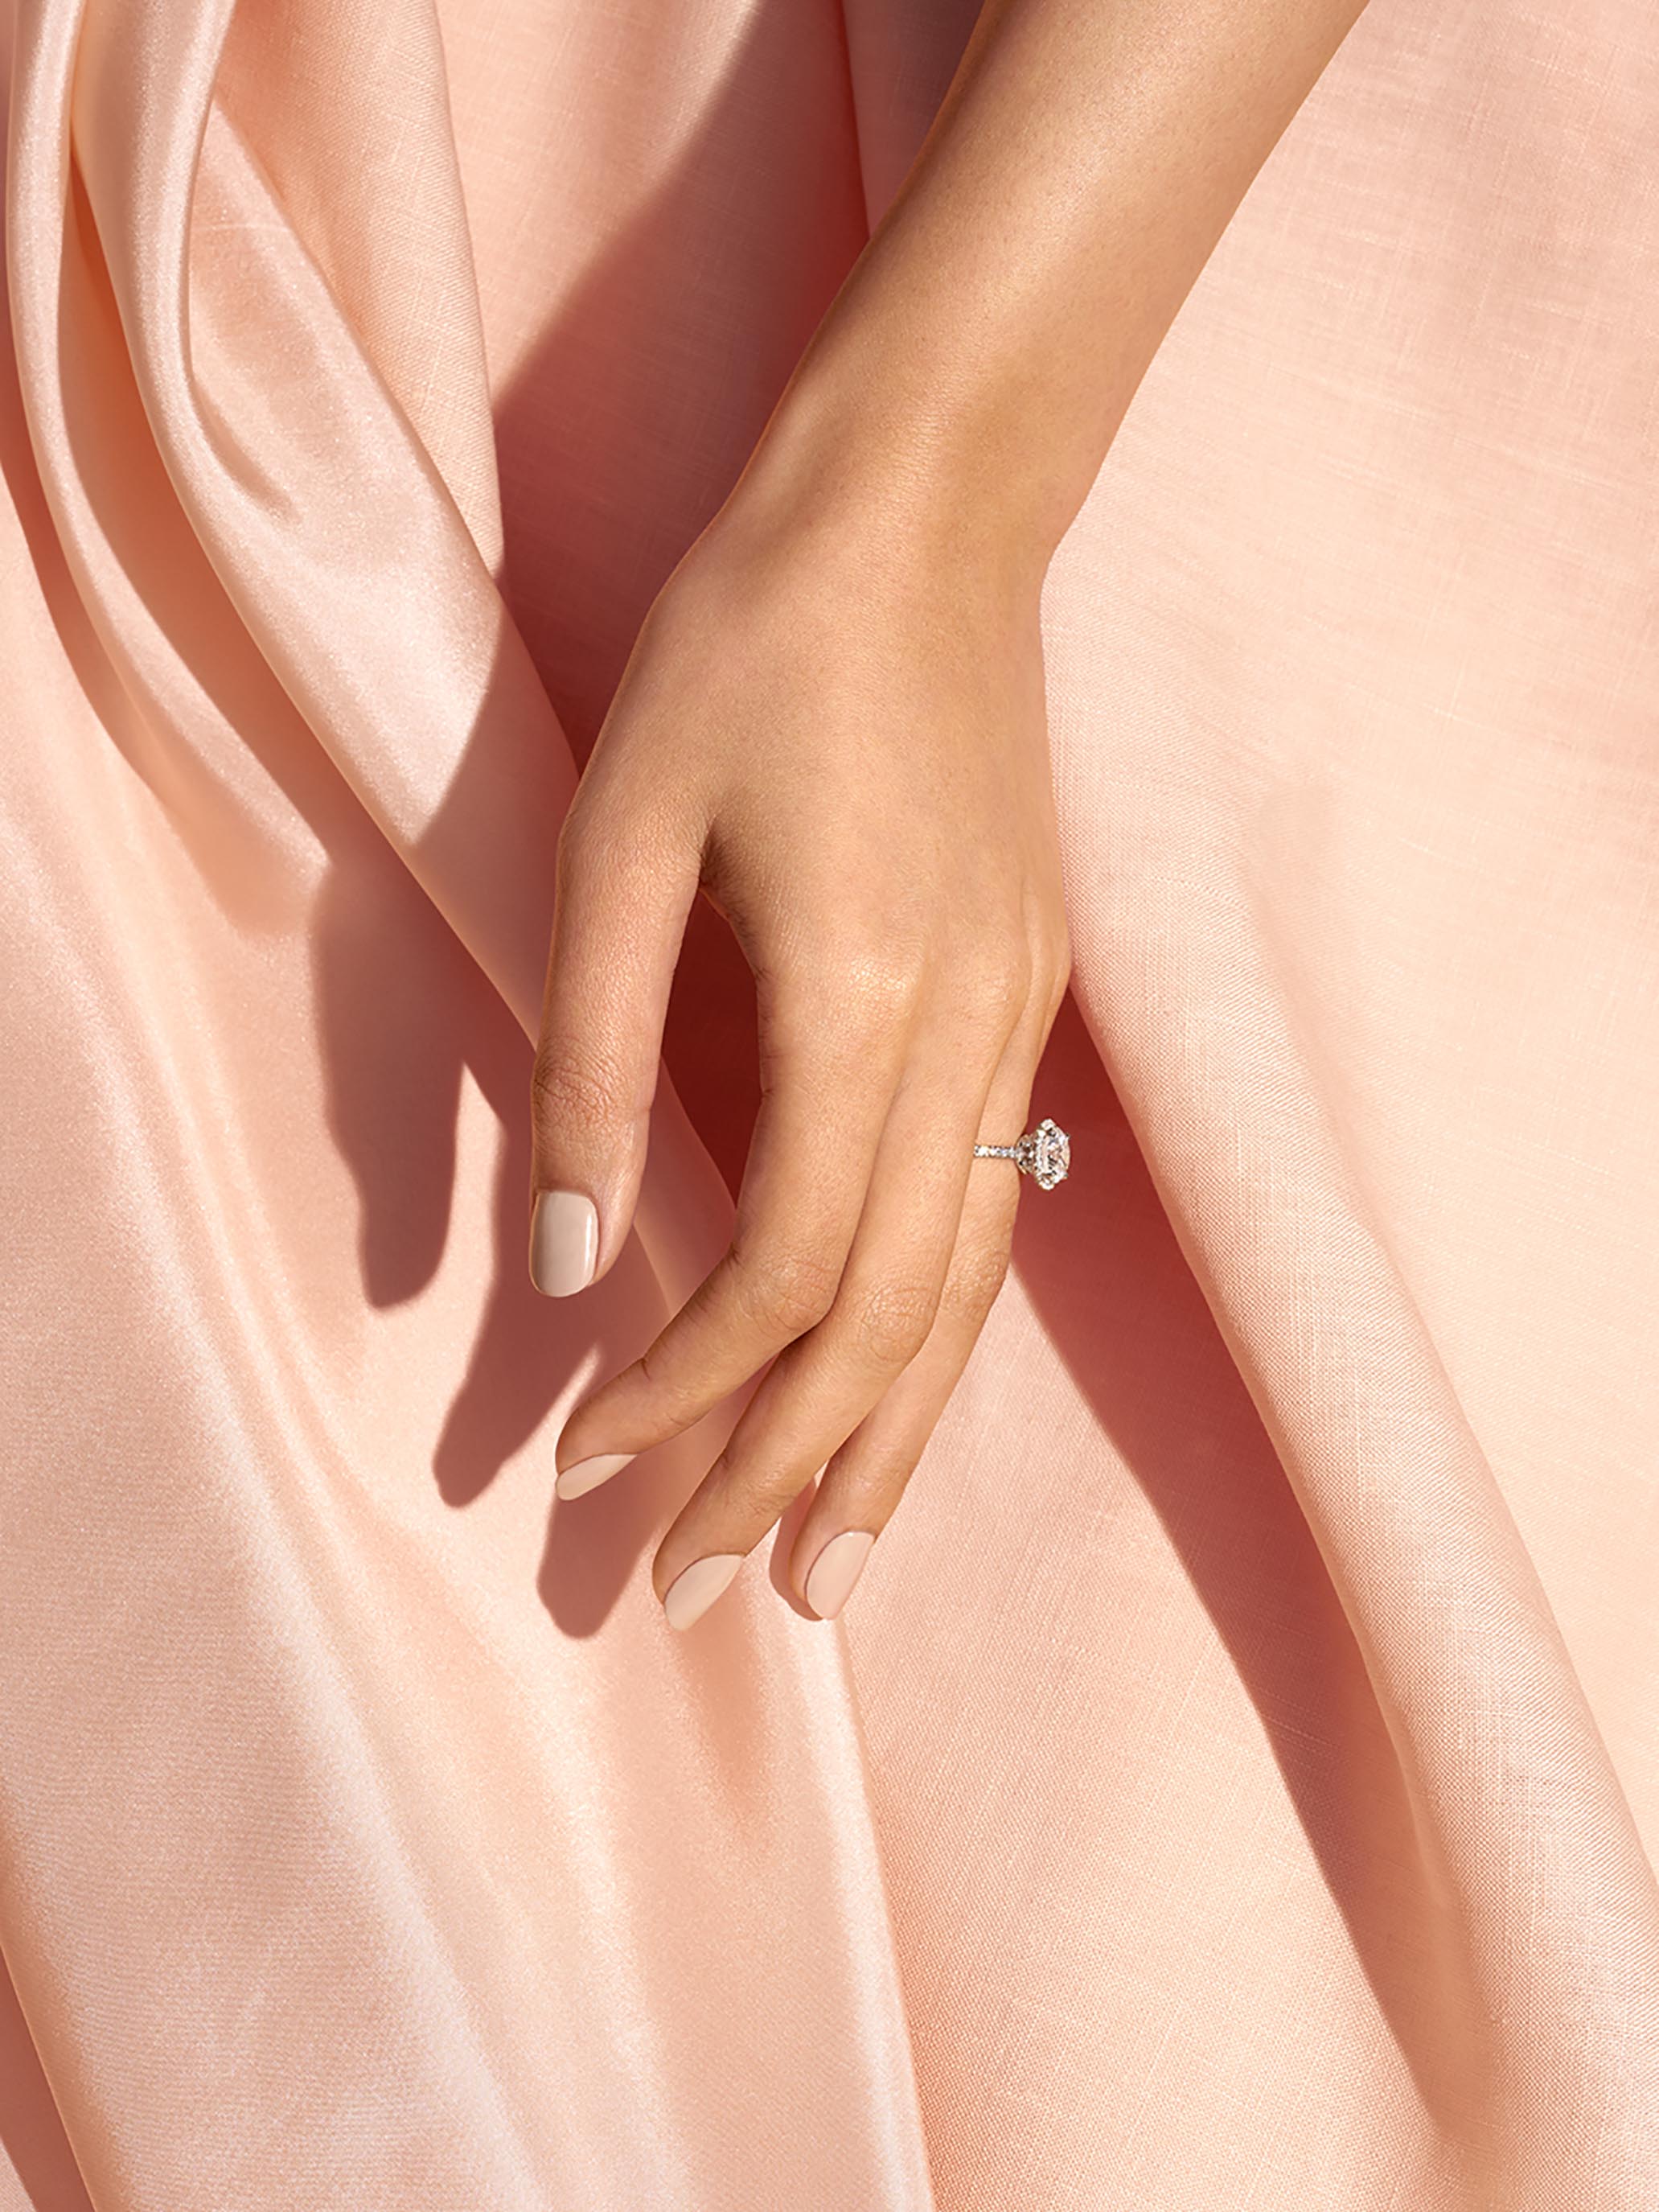 STAN Couple Engagement Rings Halo Diamond on Caucasian Skin Hand